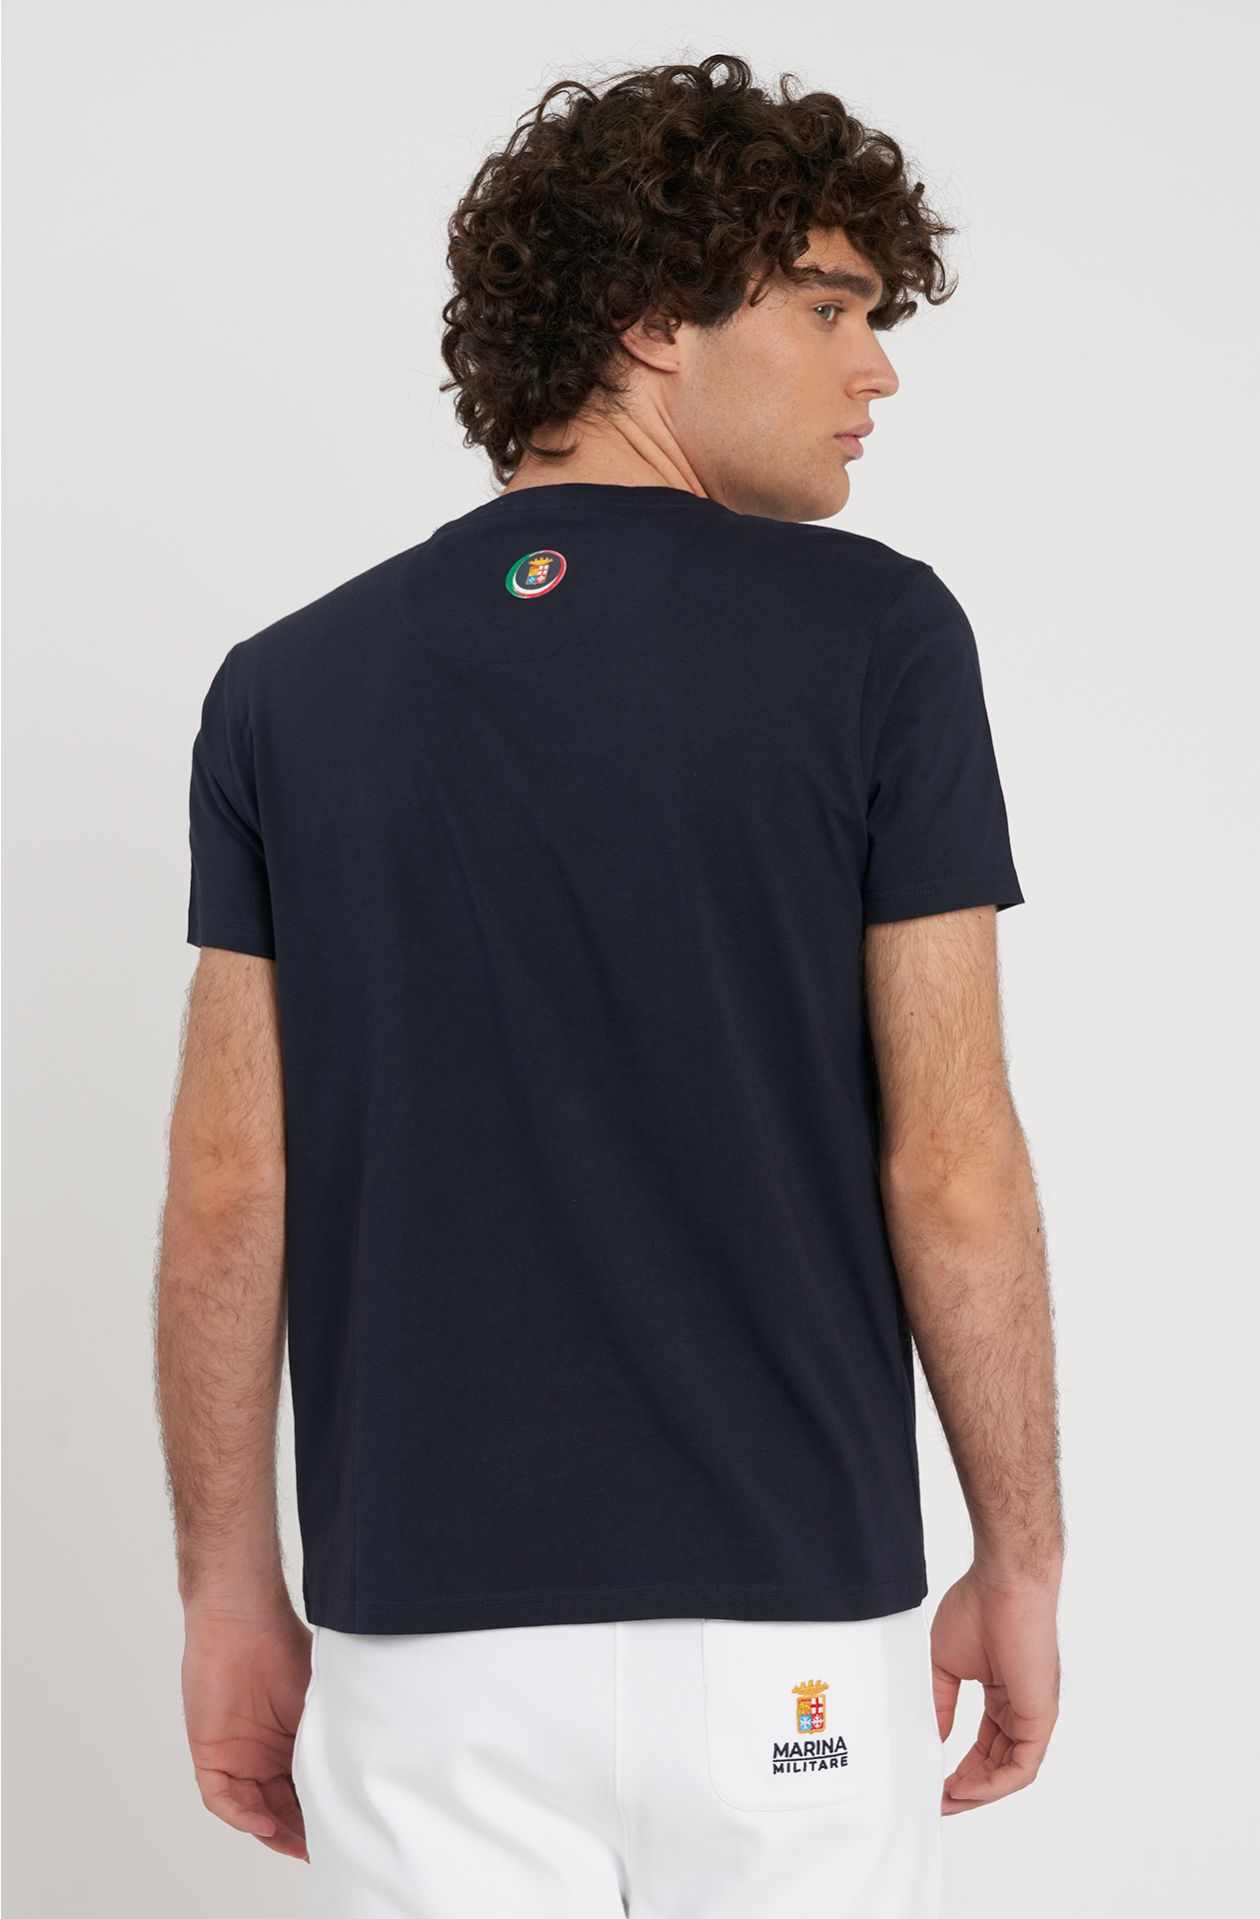 Amerigo Vespucci world tour t-shirt